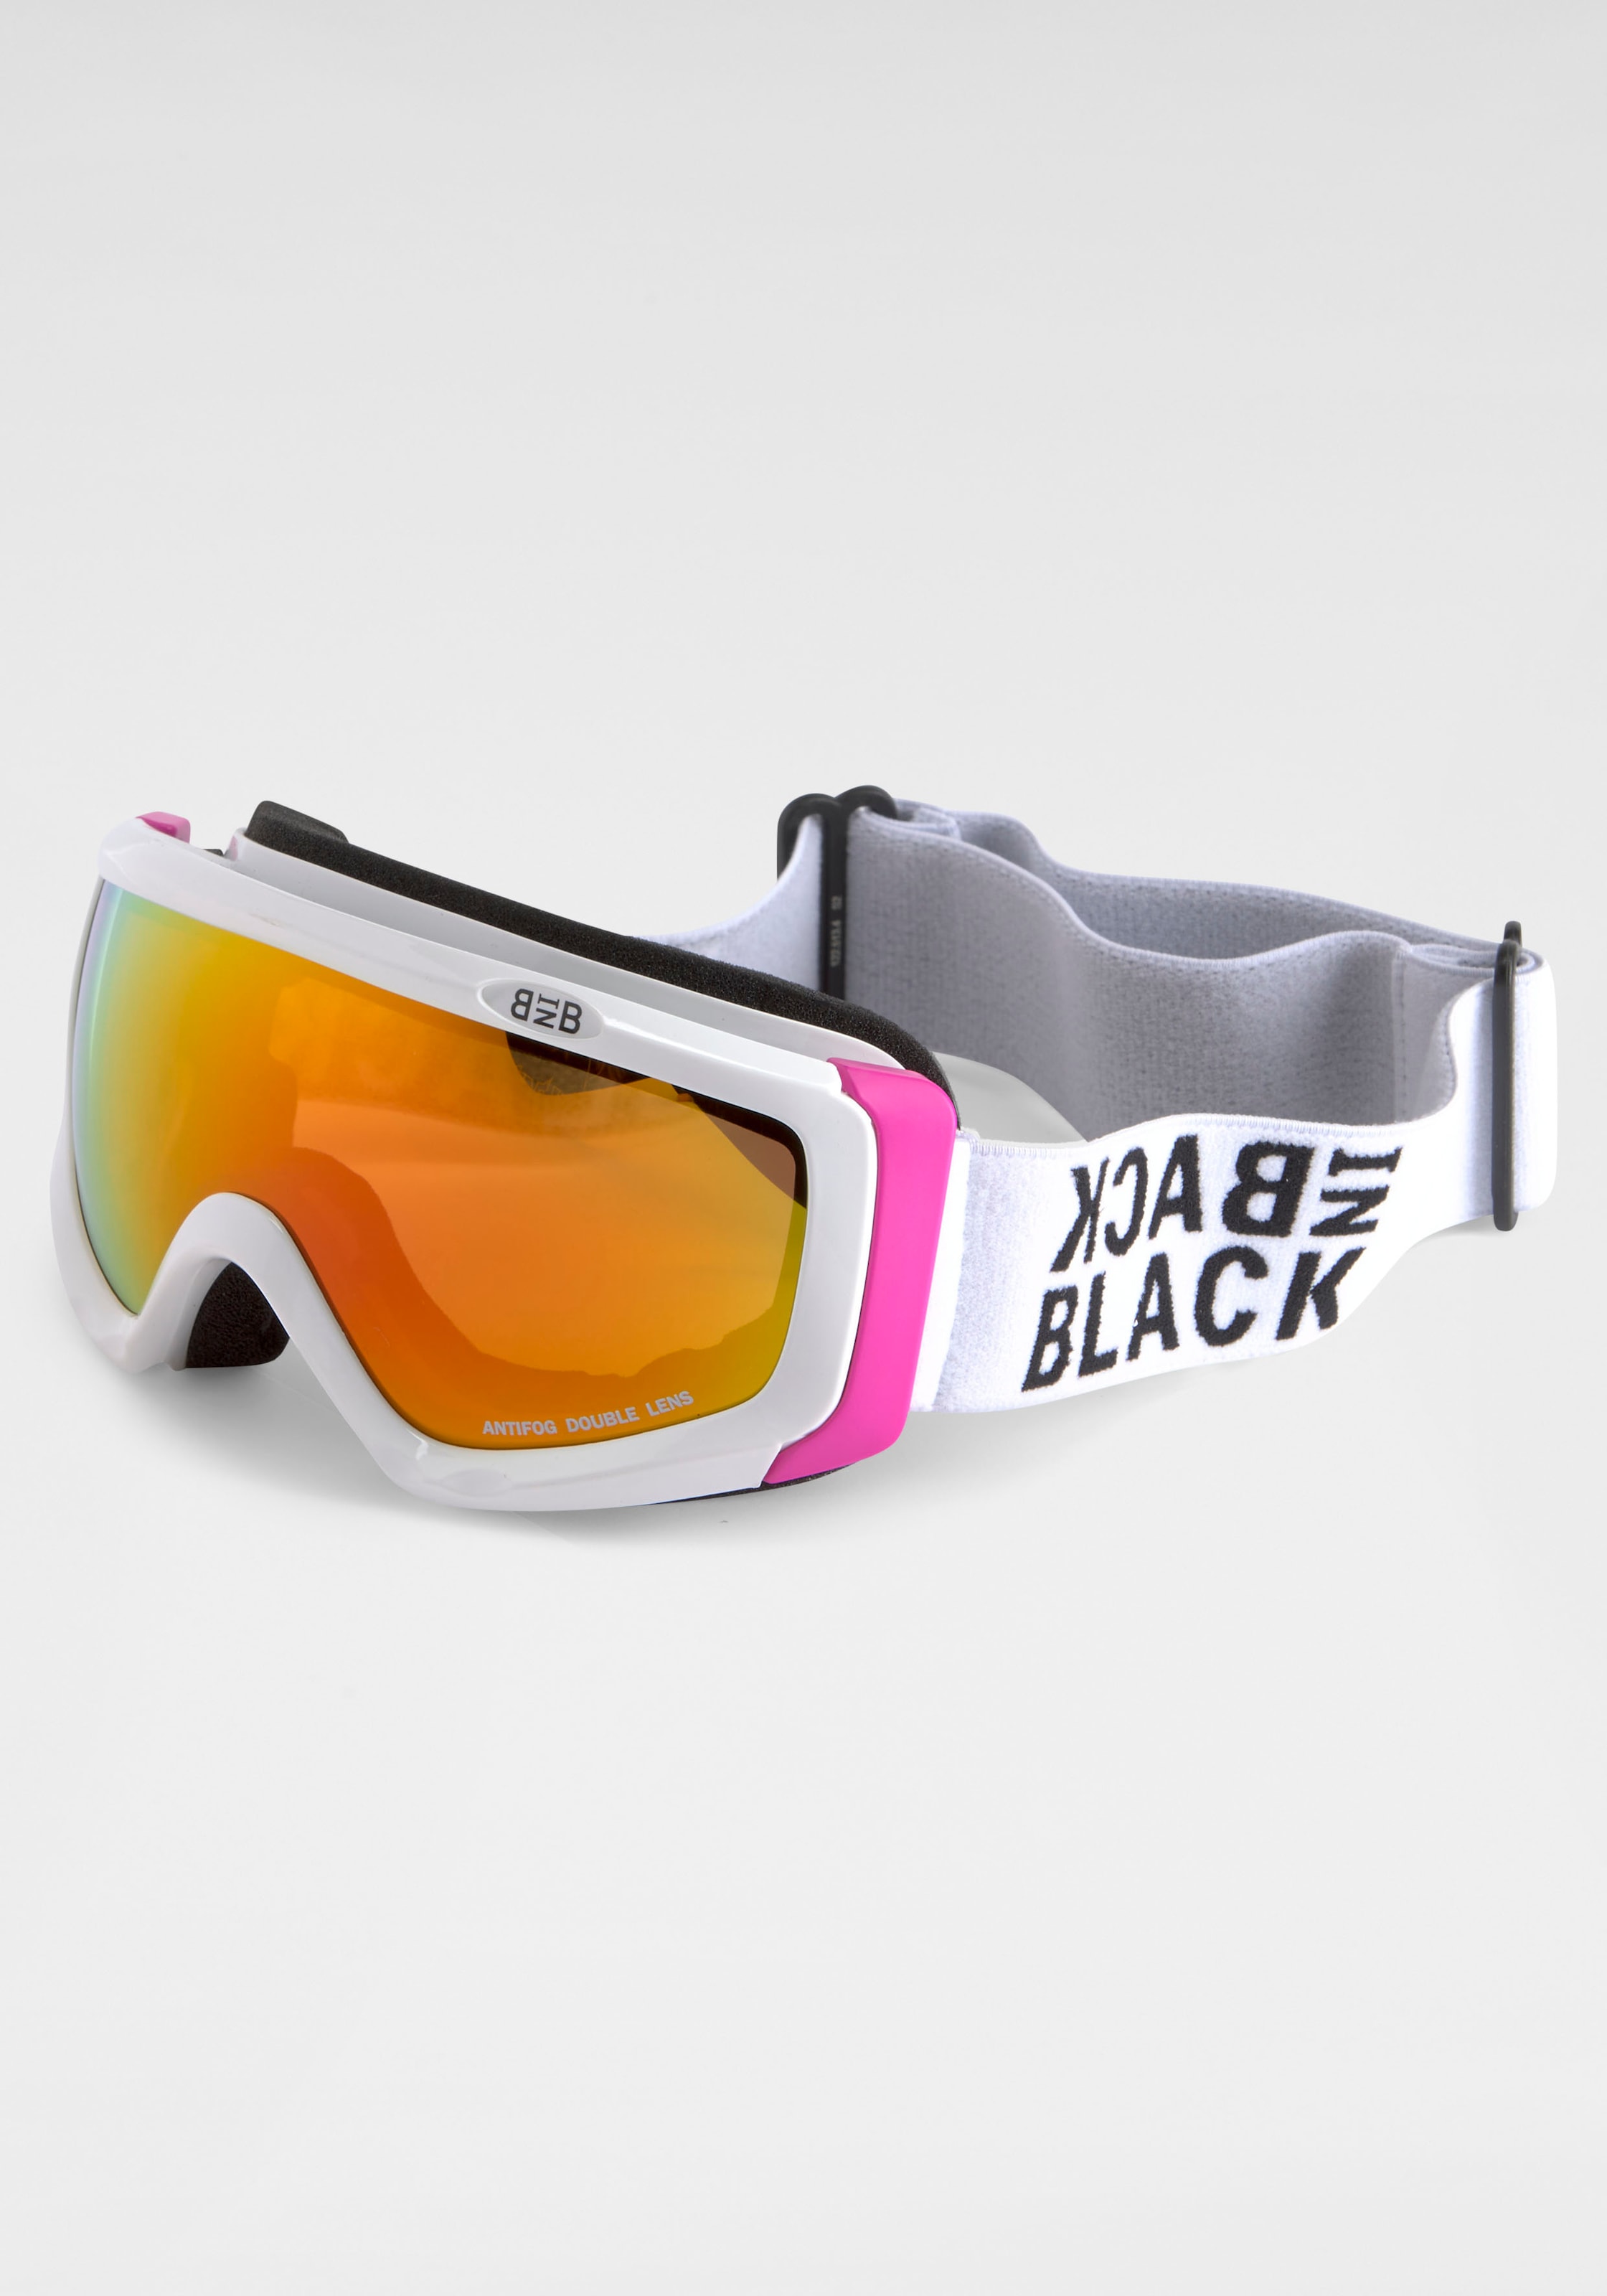 BACK IN | double Lens BAUR BLACK Antifog Skibrille, Eyewear